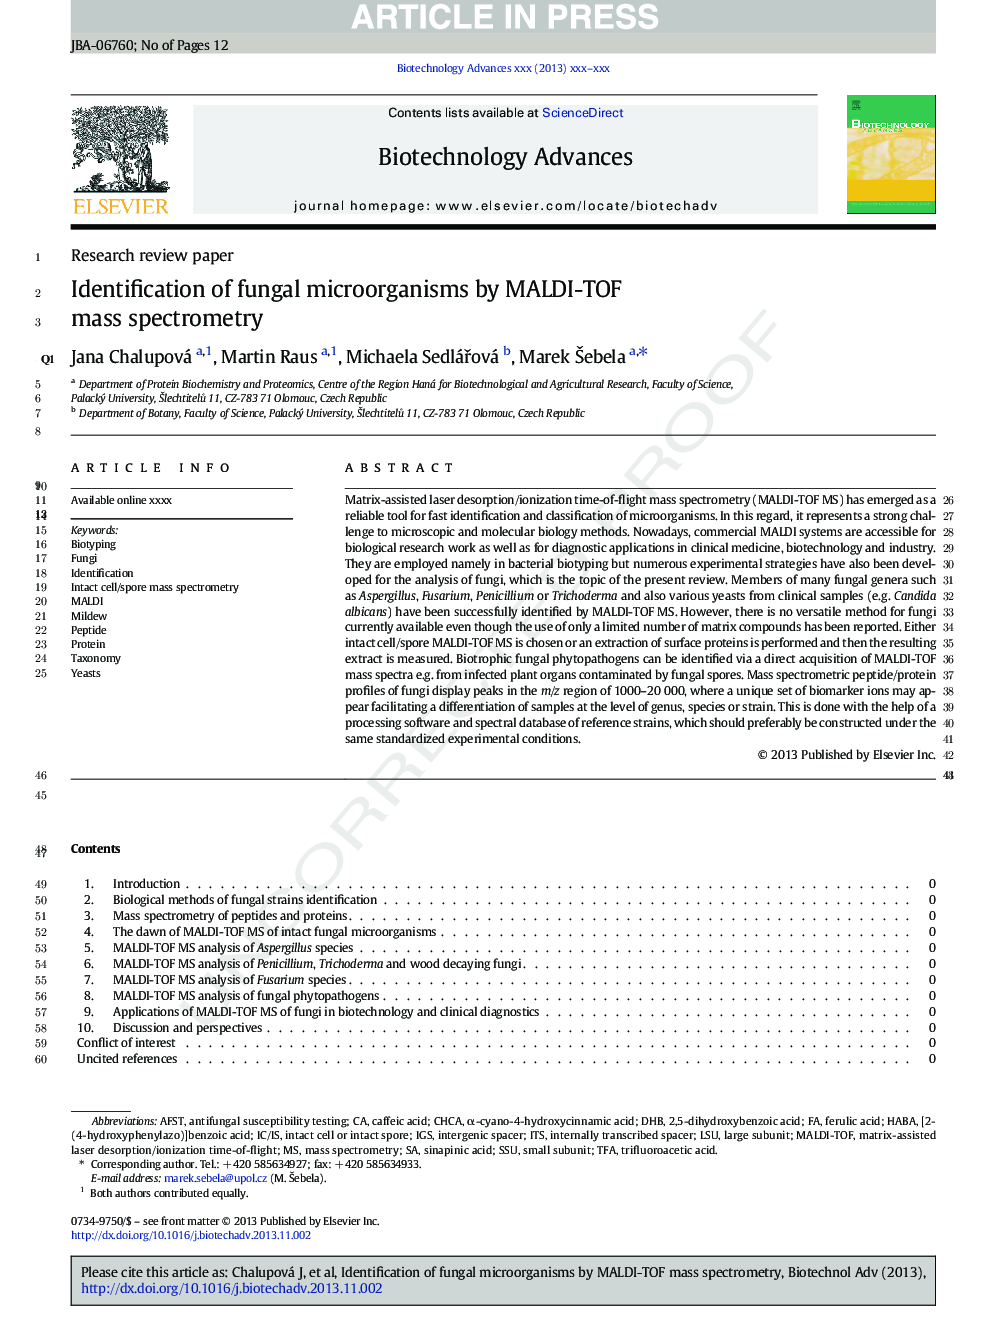 Identification of fungal microorganisms by MALDI-TOF mass spectrometry